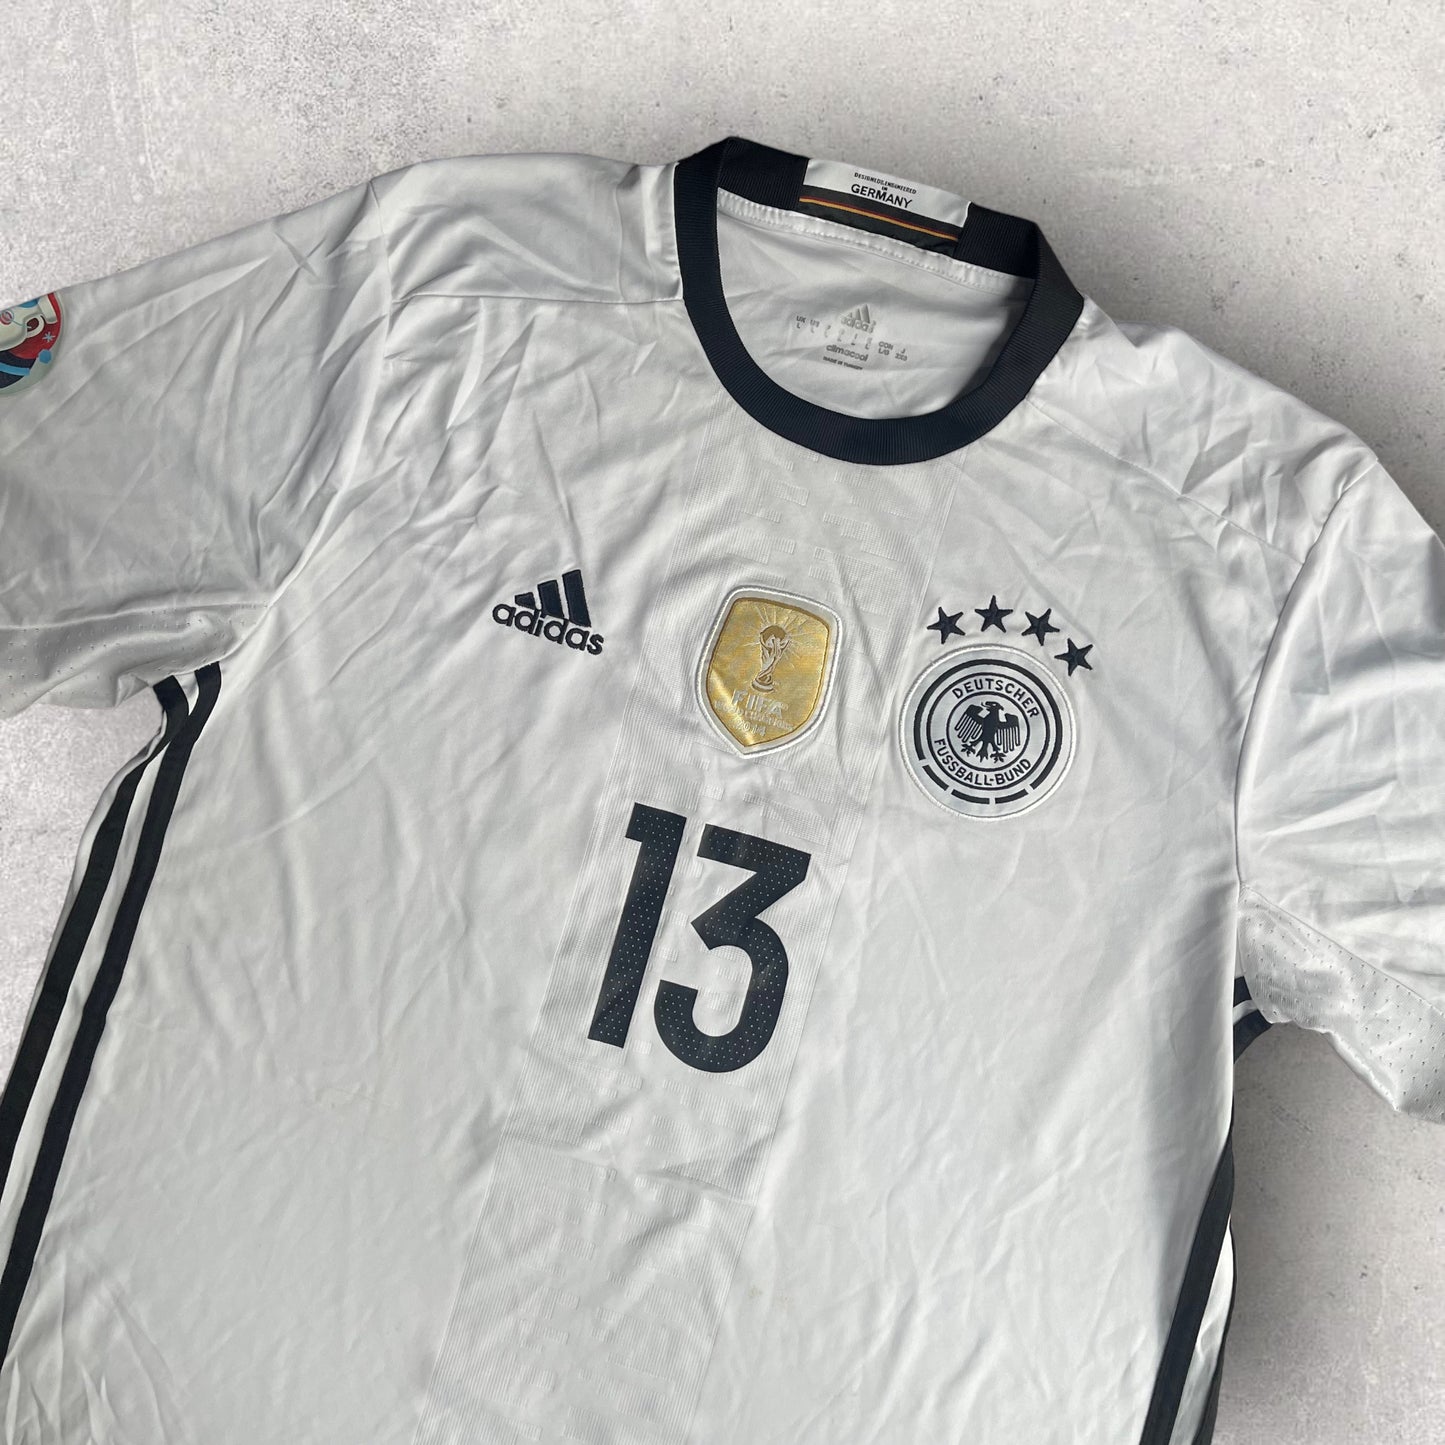 Retro Adidas Germany National Team 2014 Football Jersey - Large